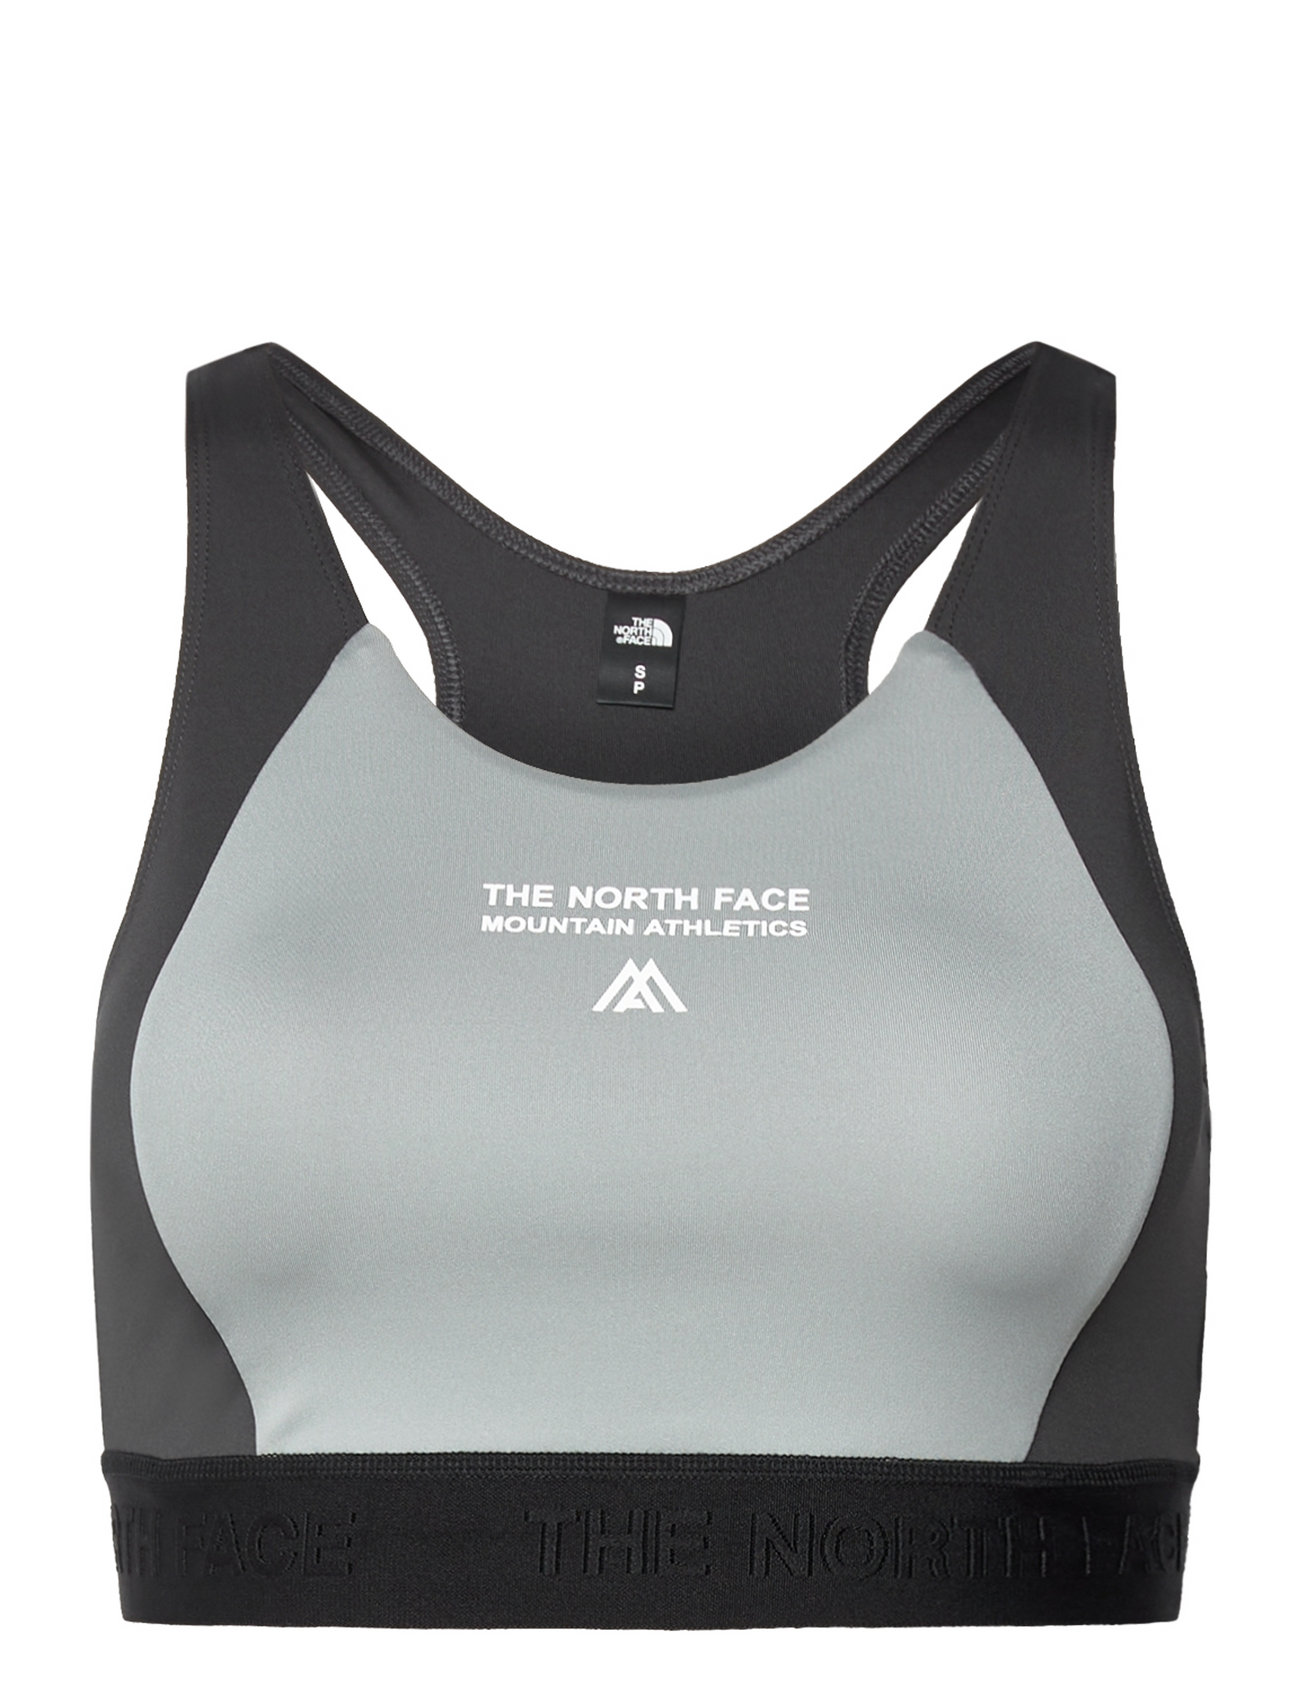 The North Face W Ma Bra - Sports bras